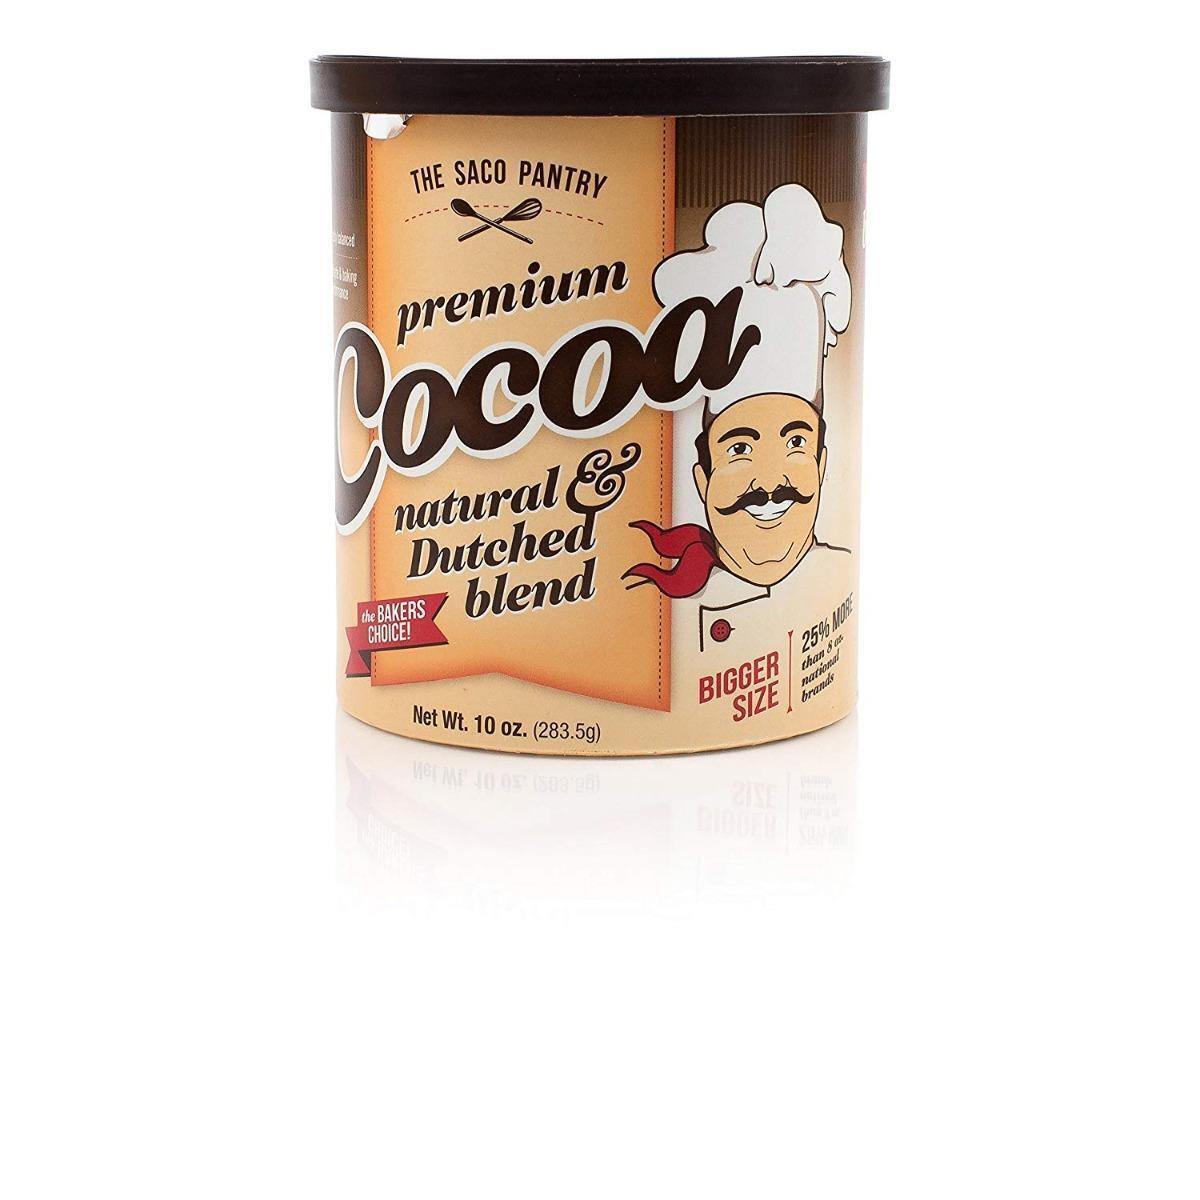 The Saco Pantry KHLV00955305 Premium Cocoa Natural & Dutched Blend, 10 oz